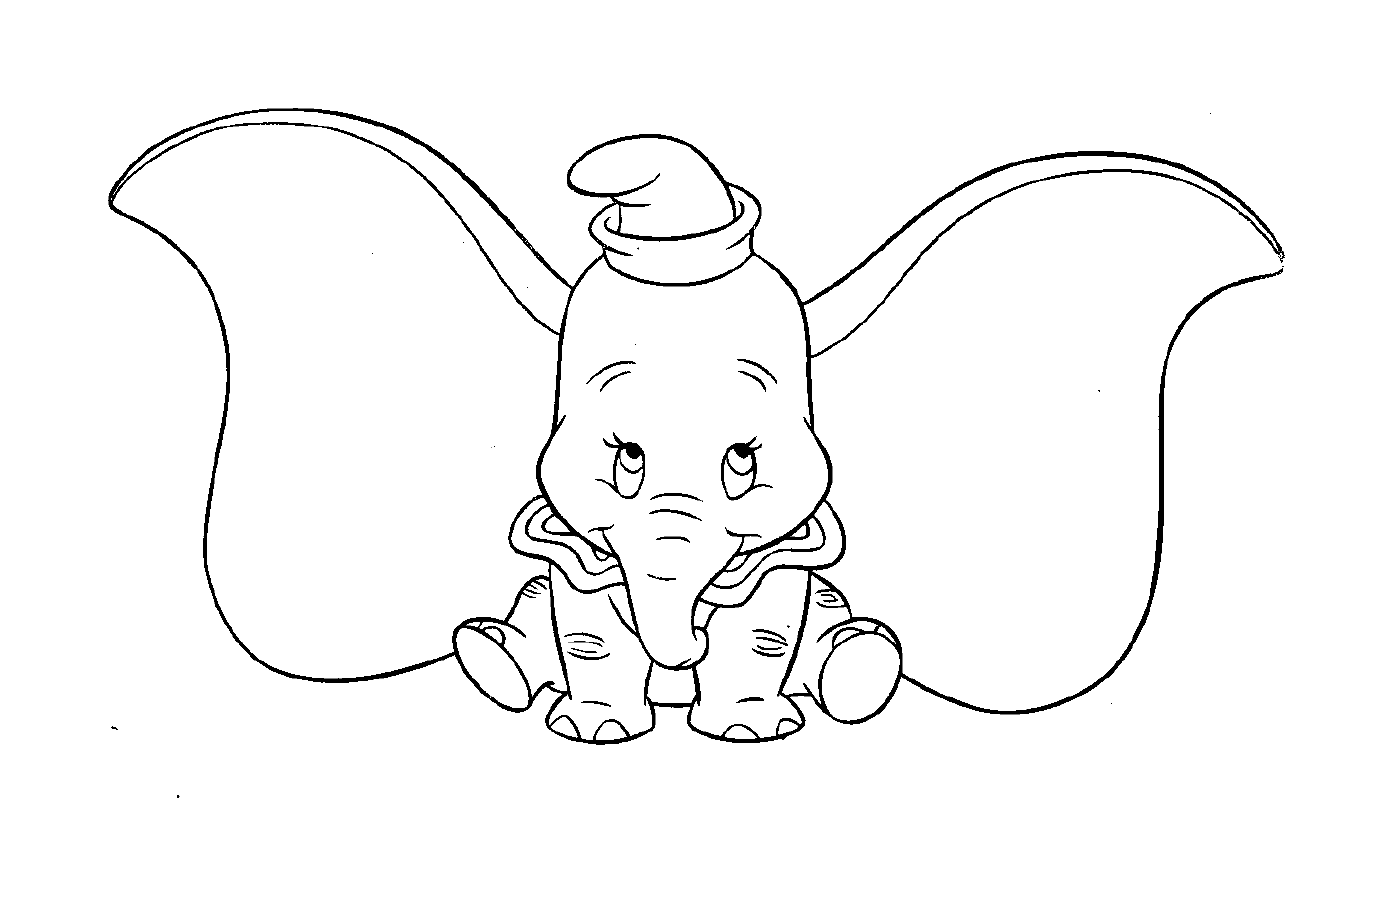  Dumbo the elephant 